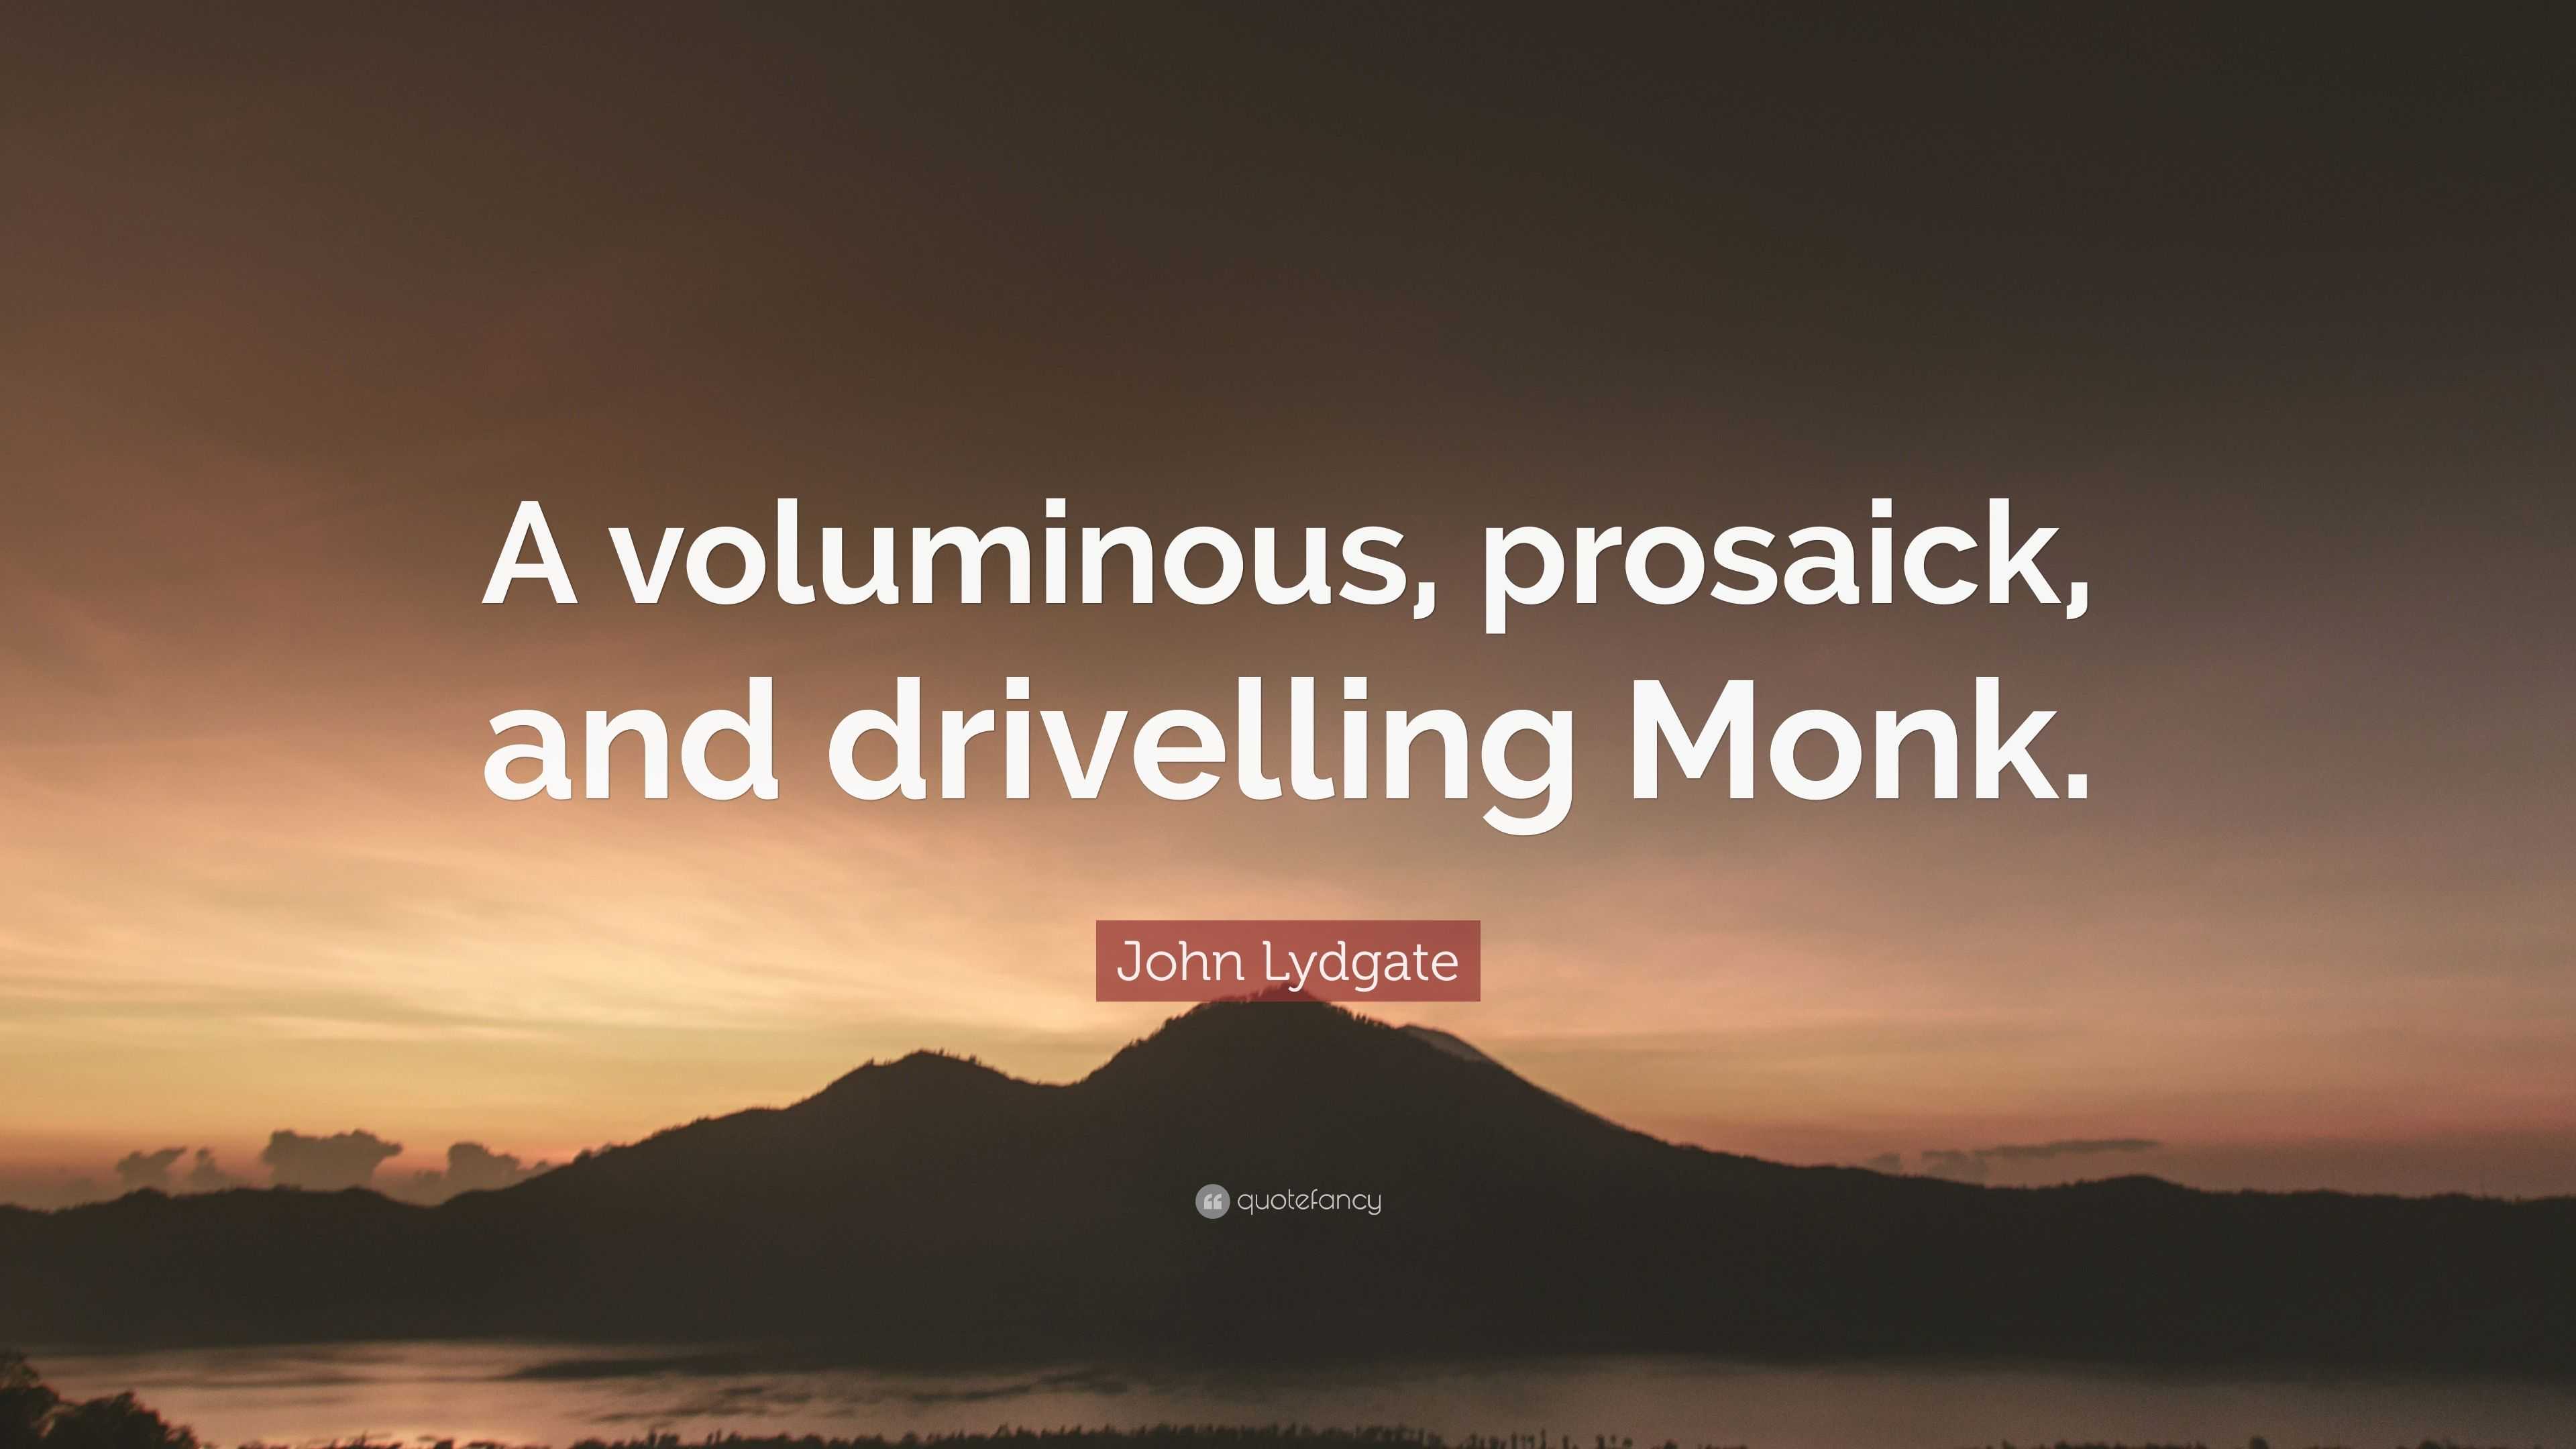 John Lydgate Quote: “A voluminous, prosaick, and drivelling Monk.”